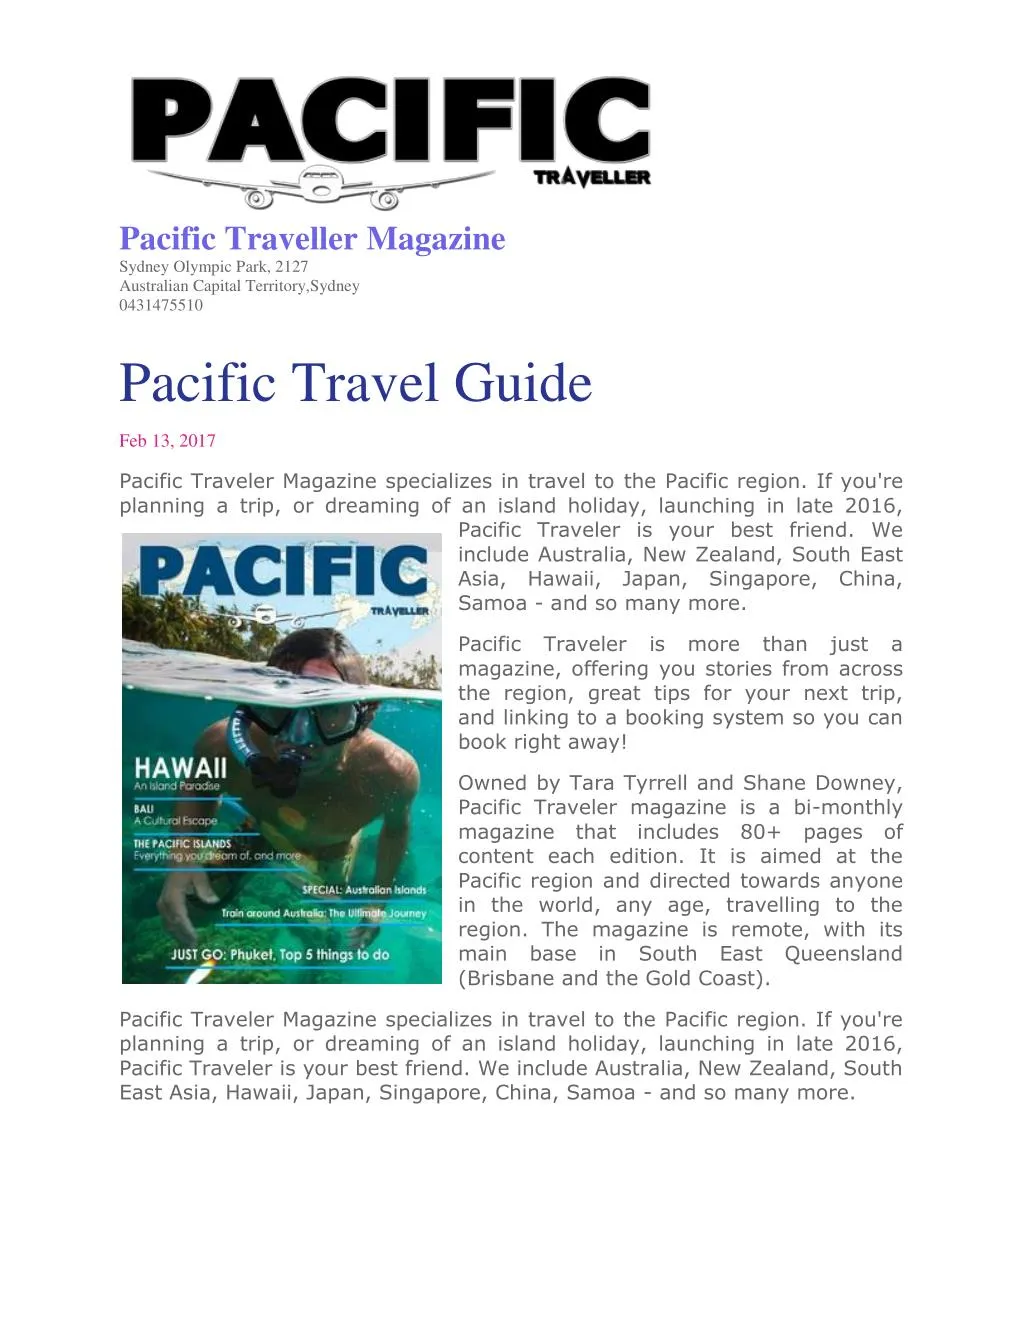 pacific traveller magazine sydney olympic park